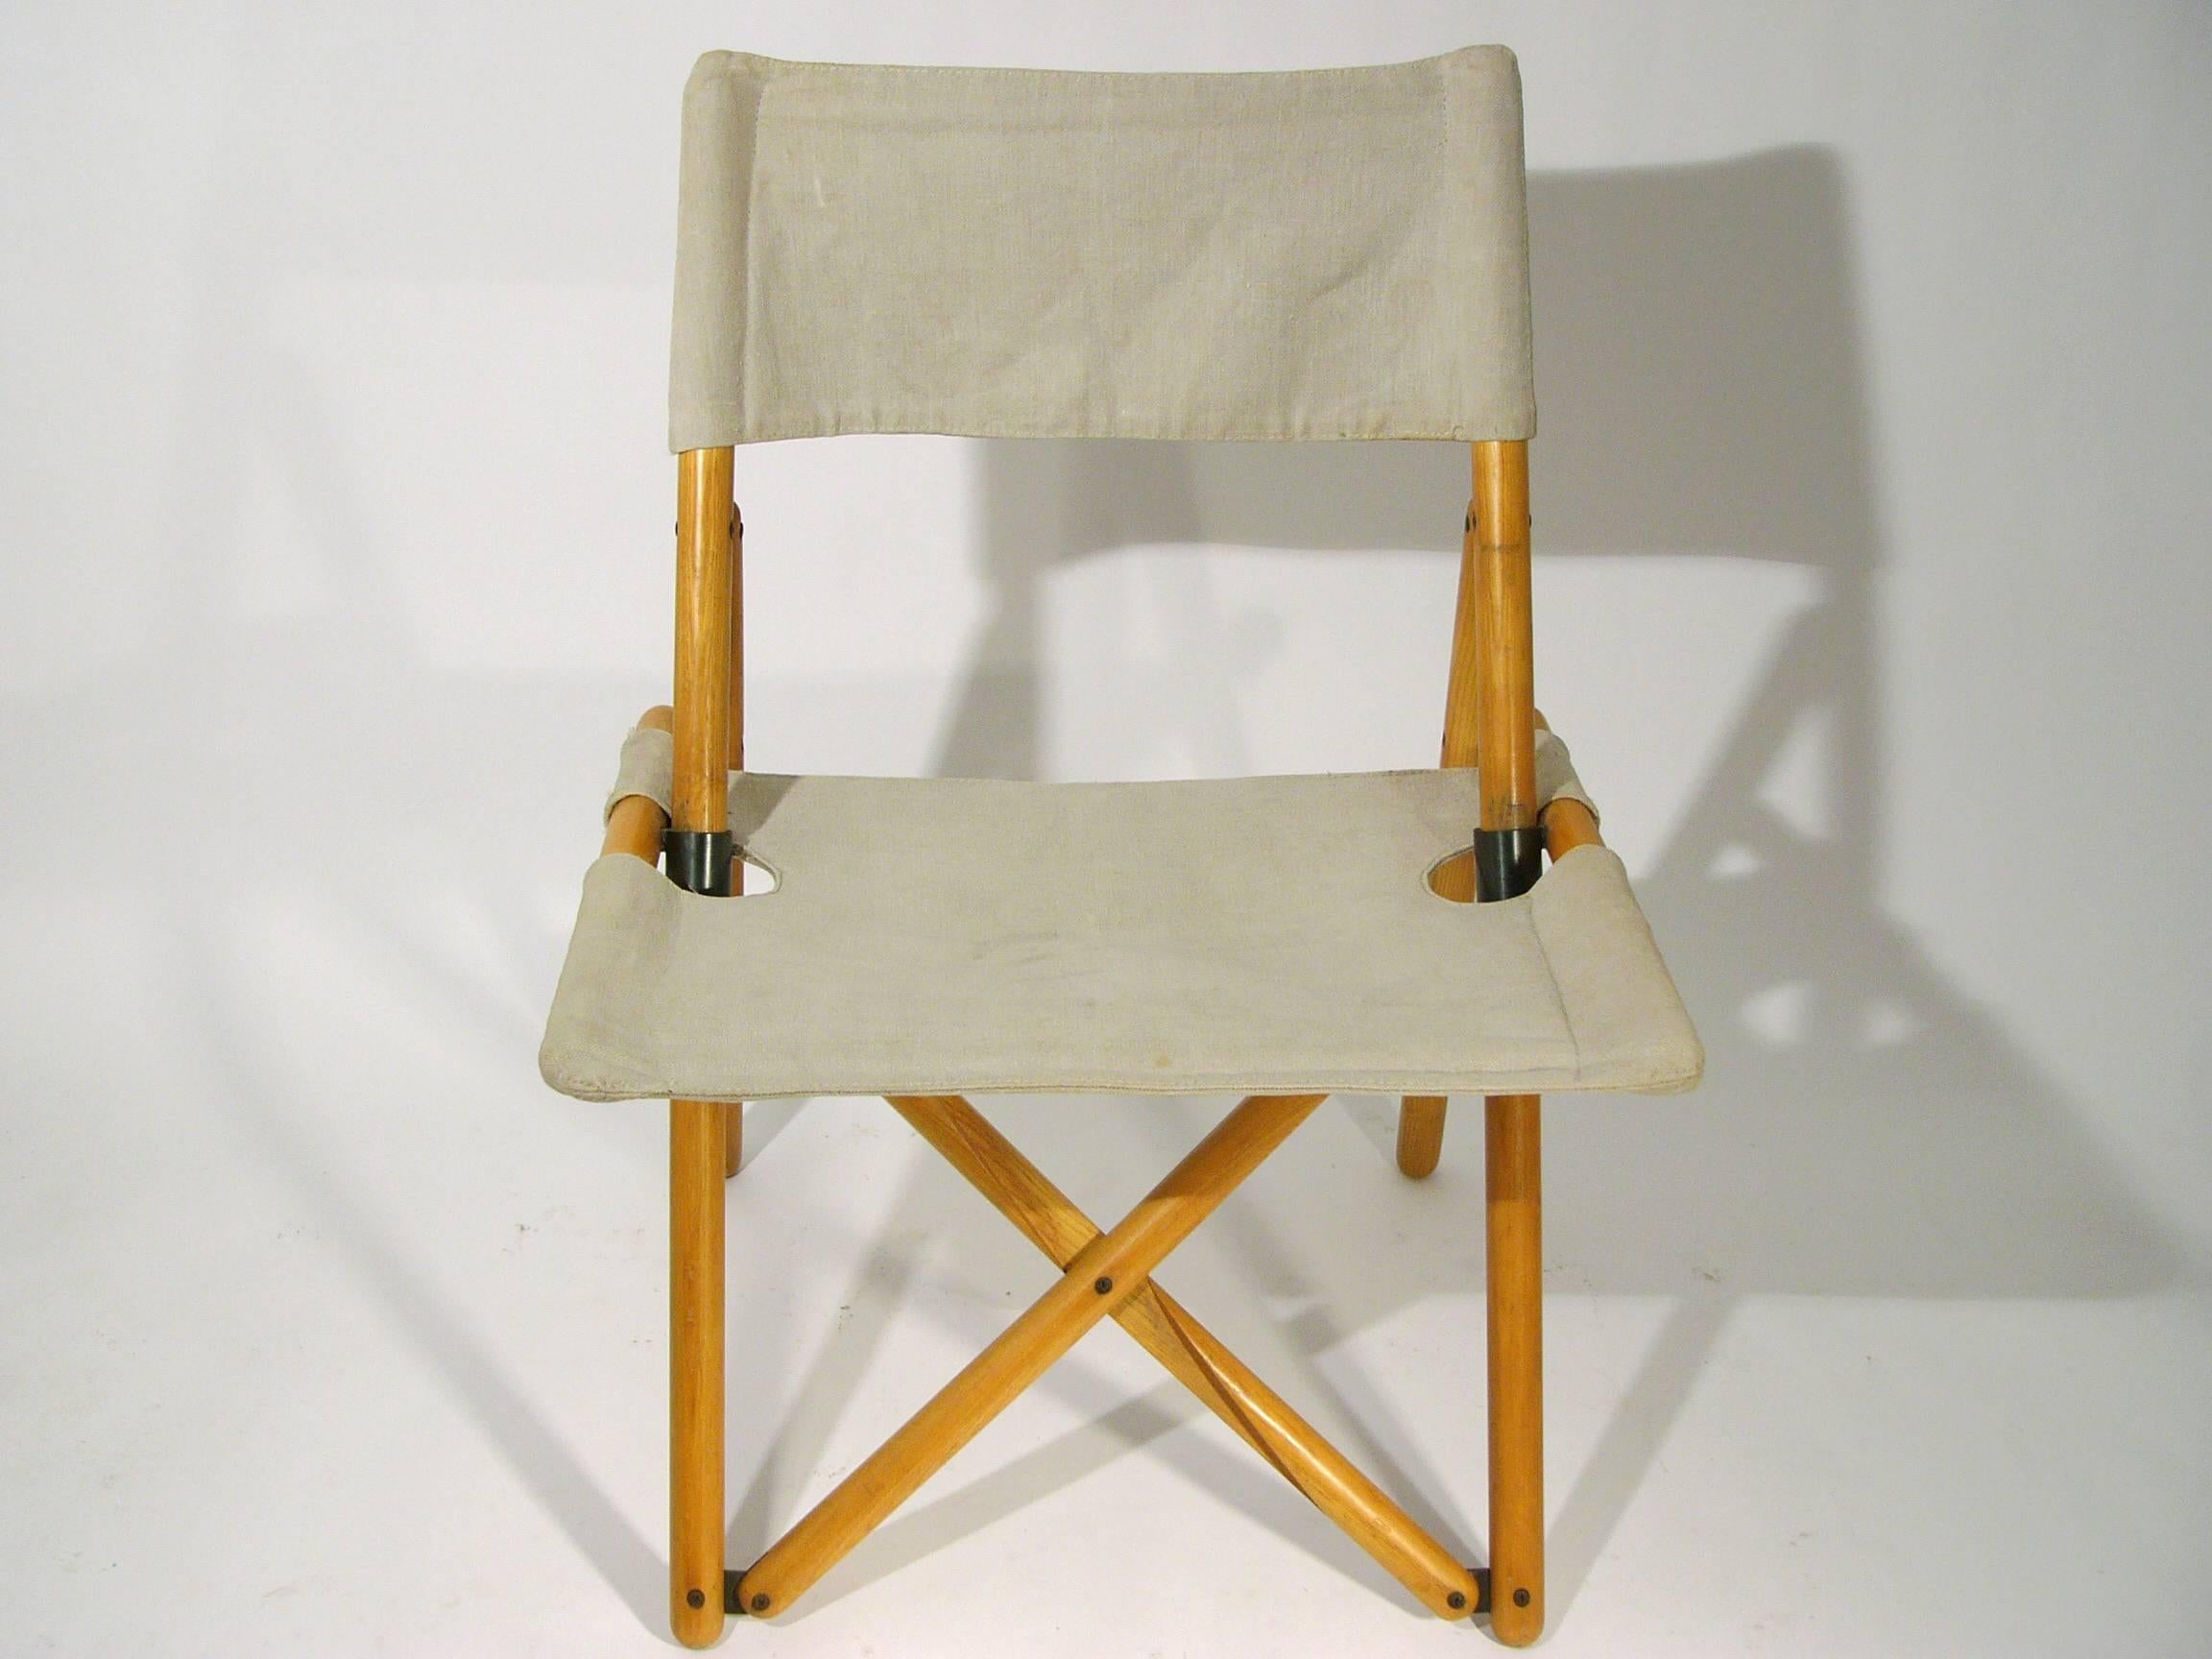 metal folding chair